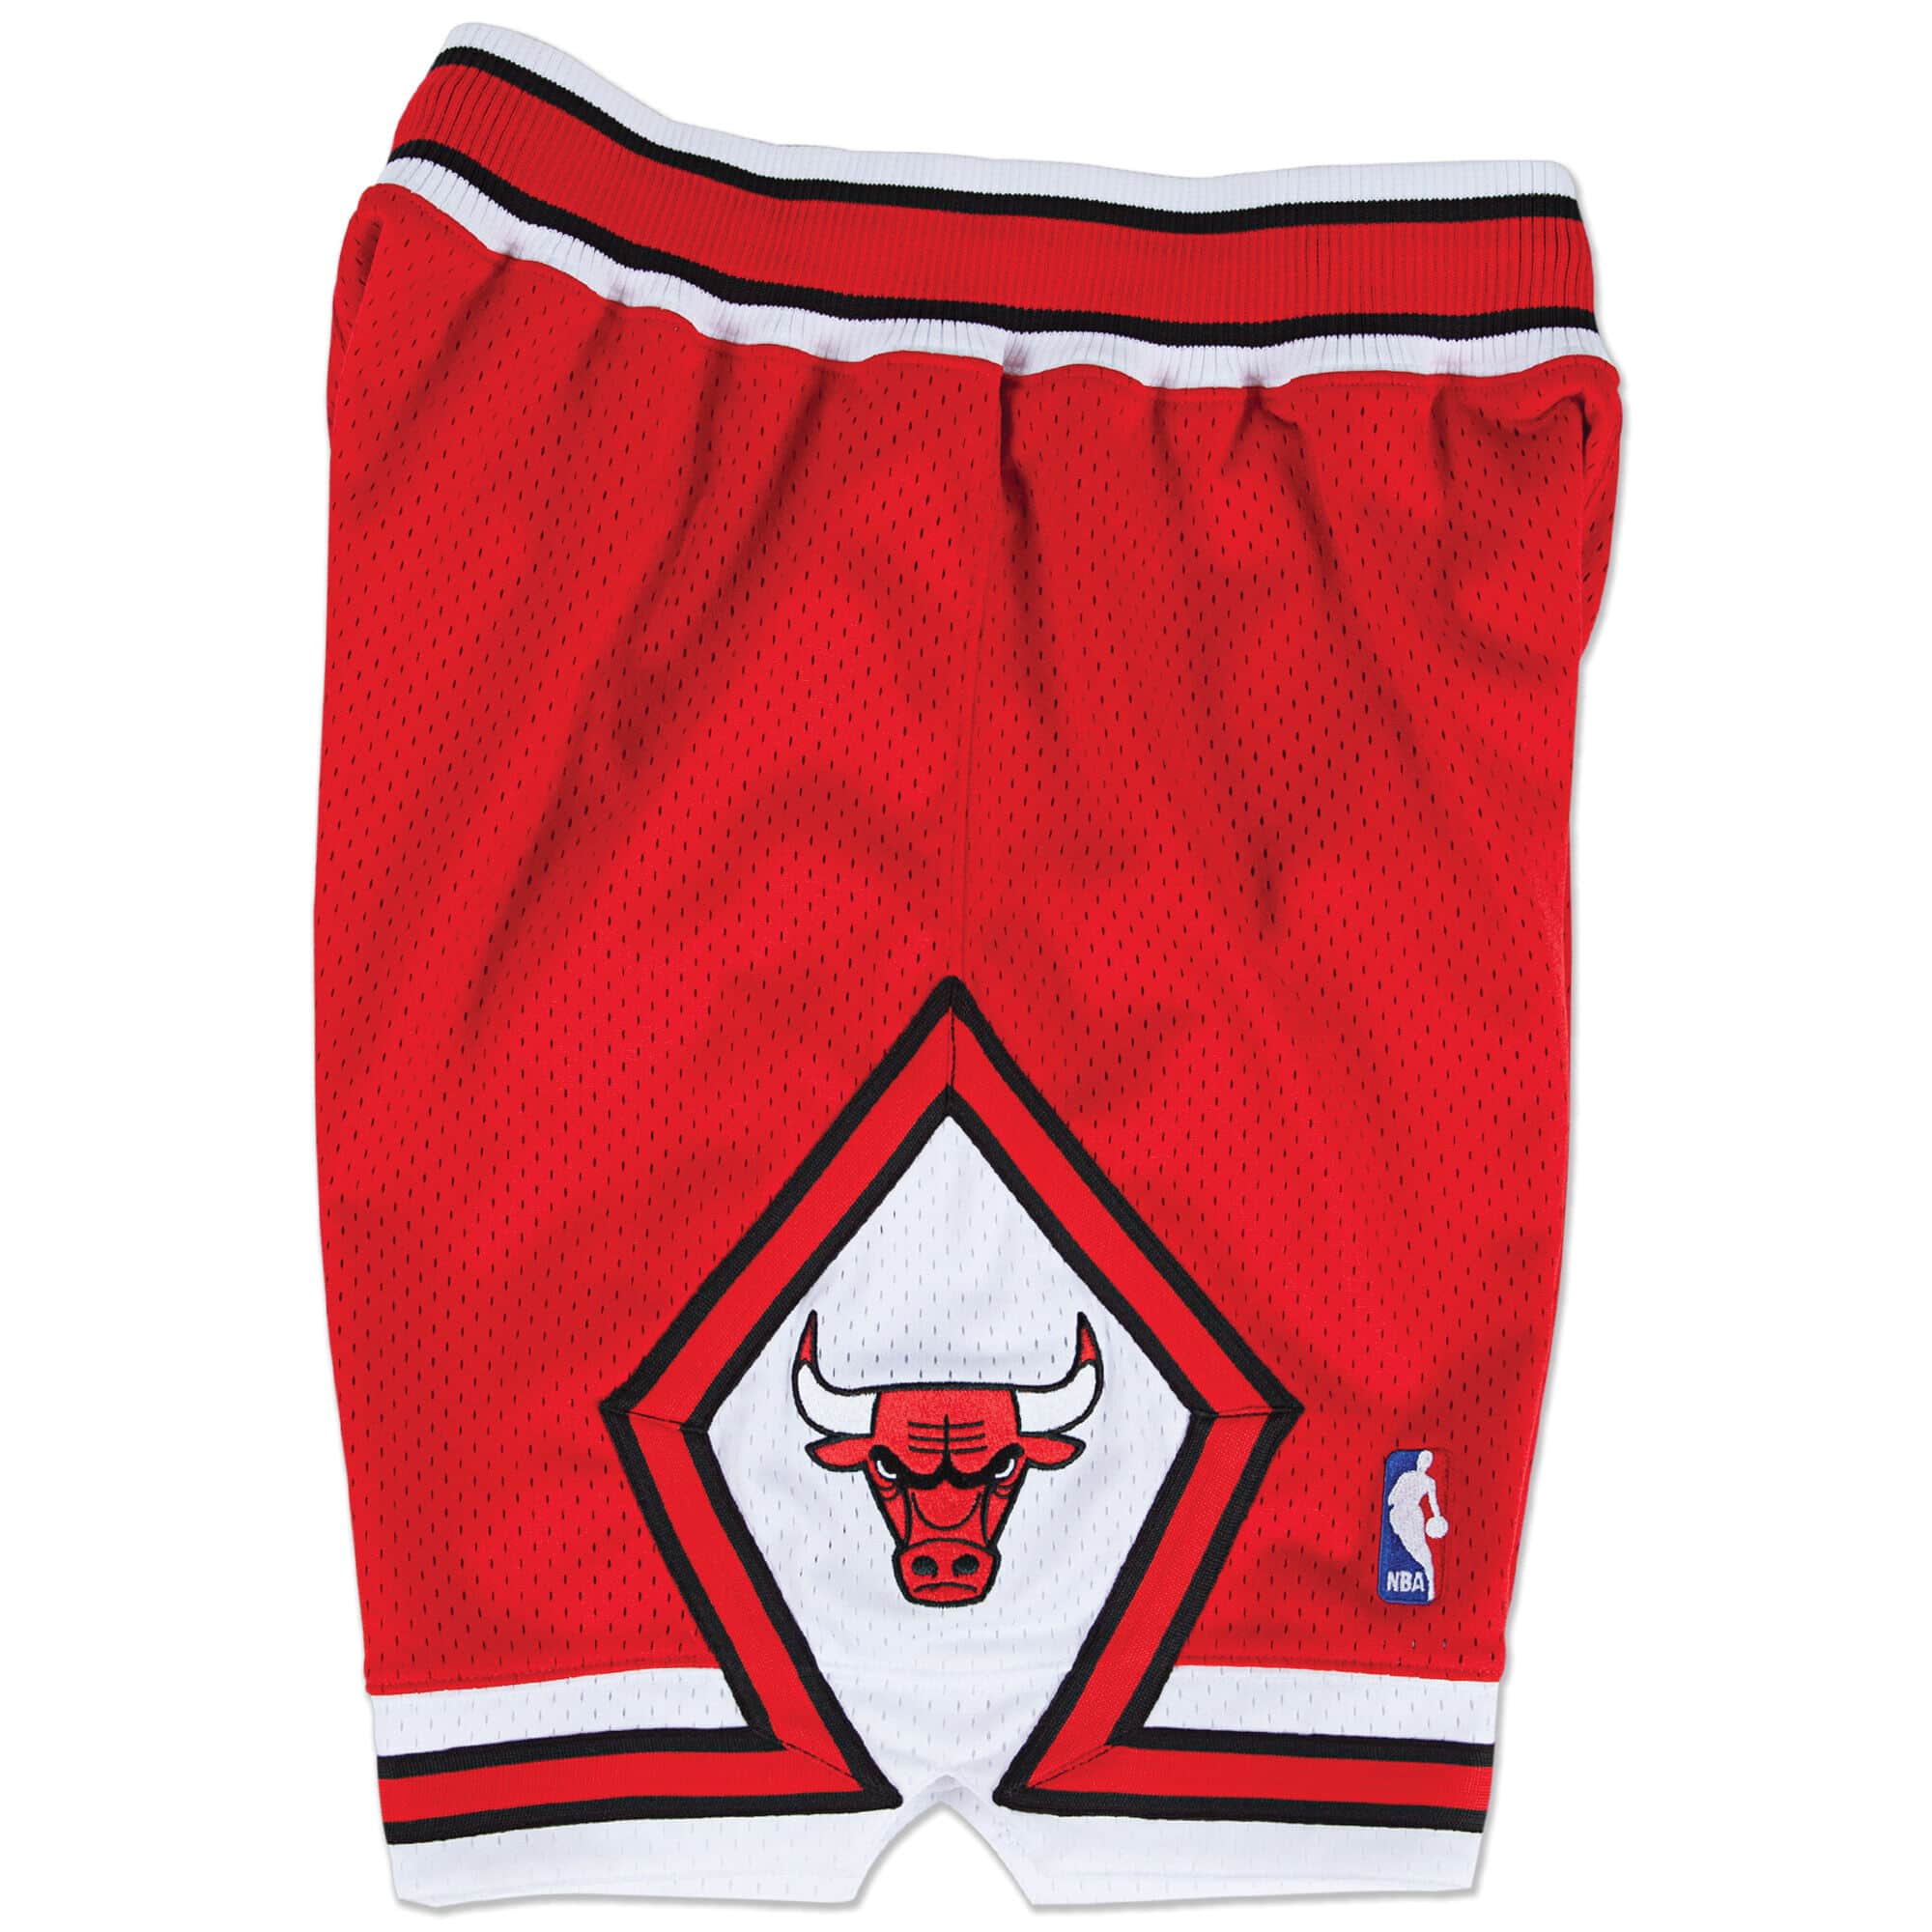 red bulls shorts